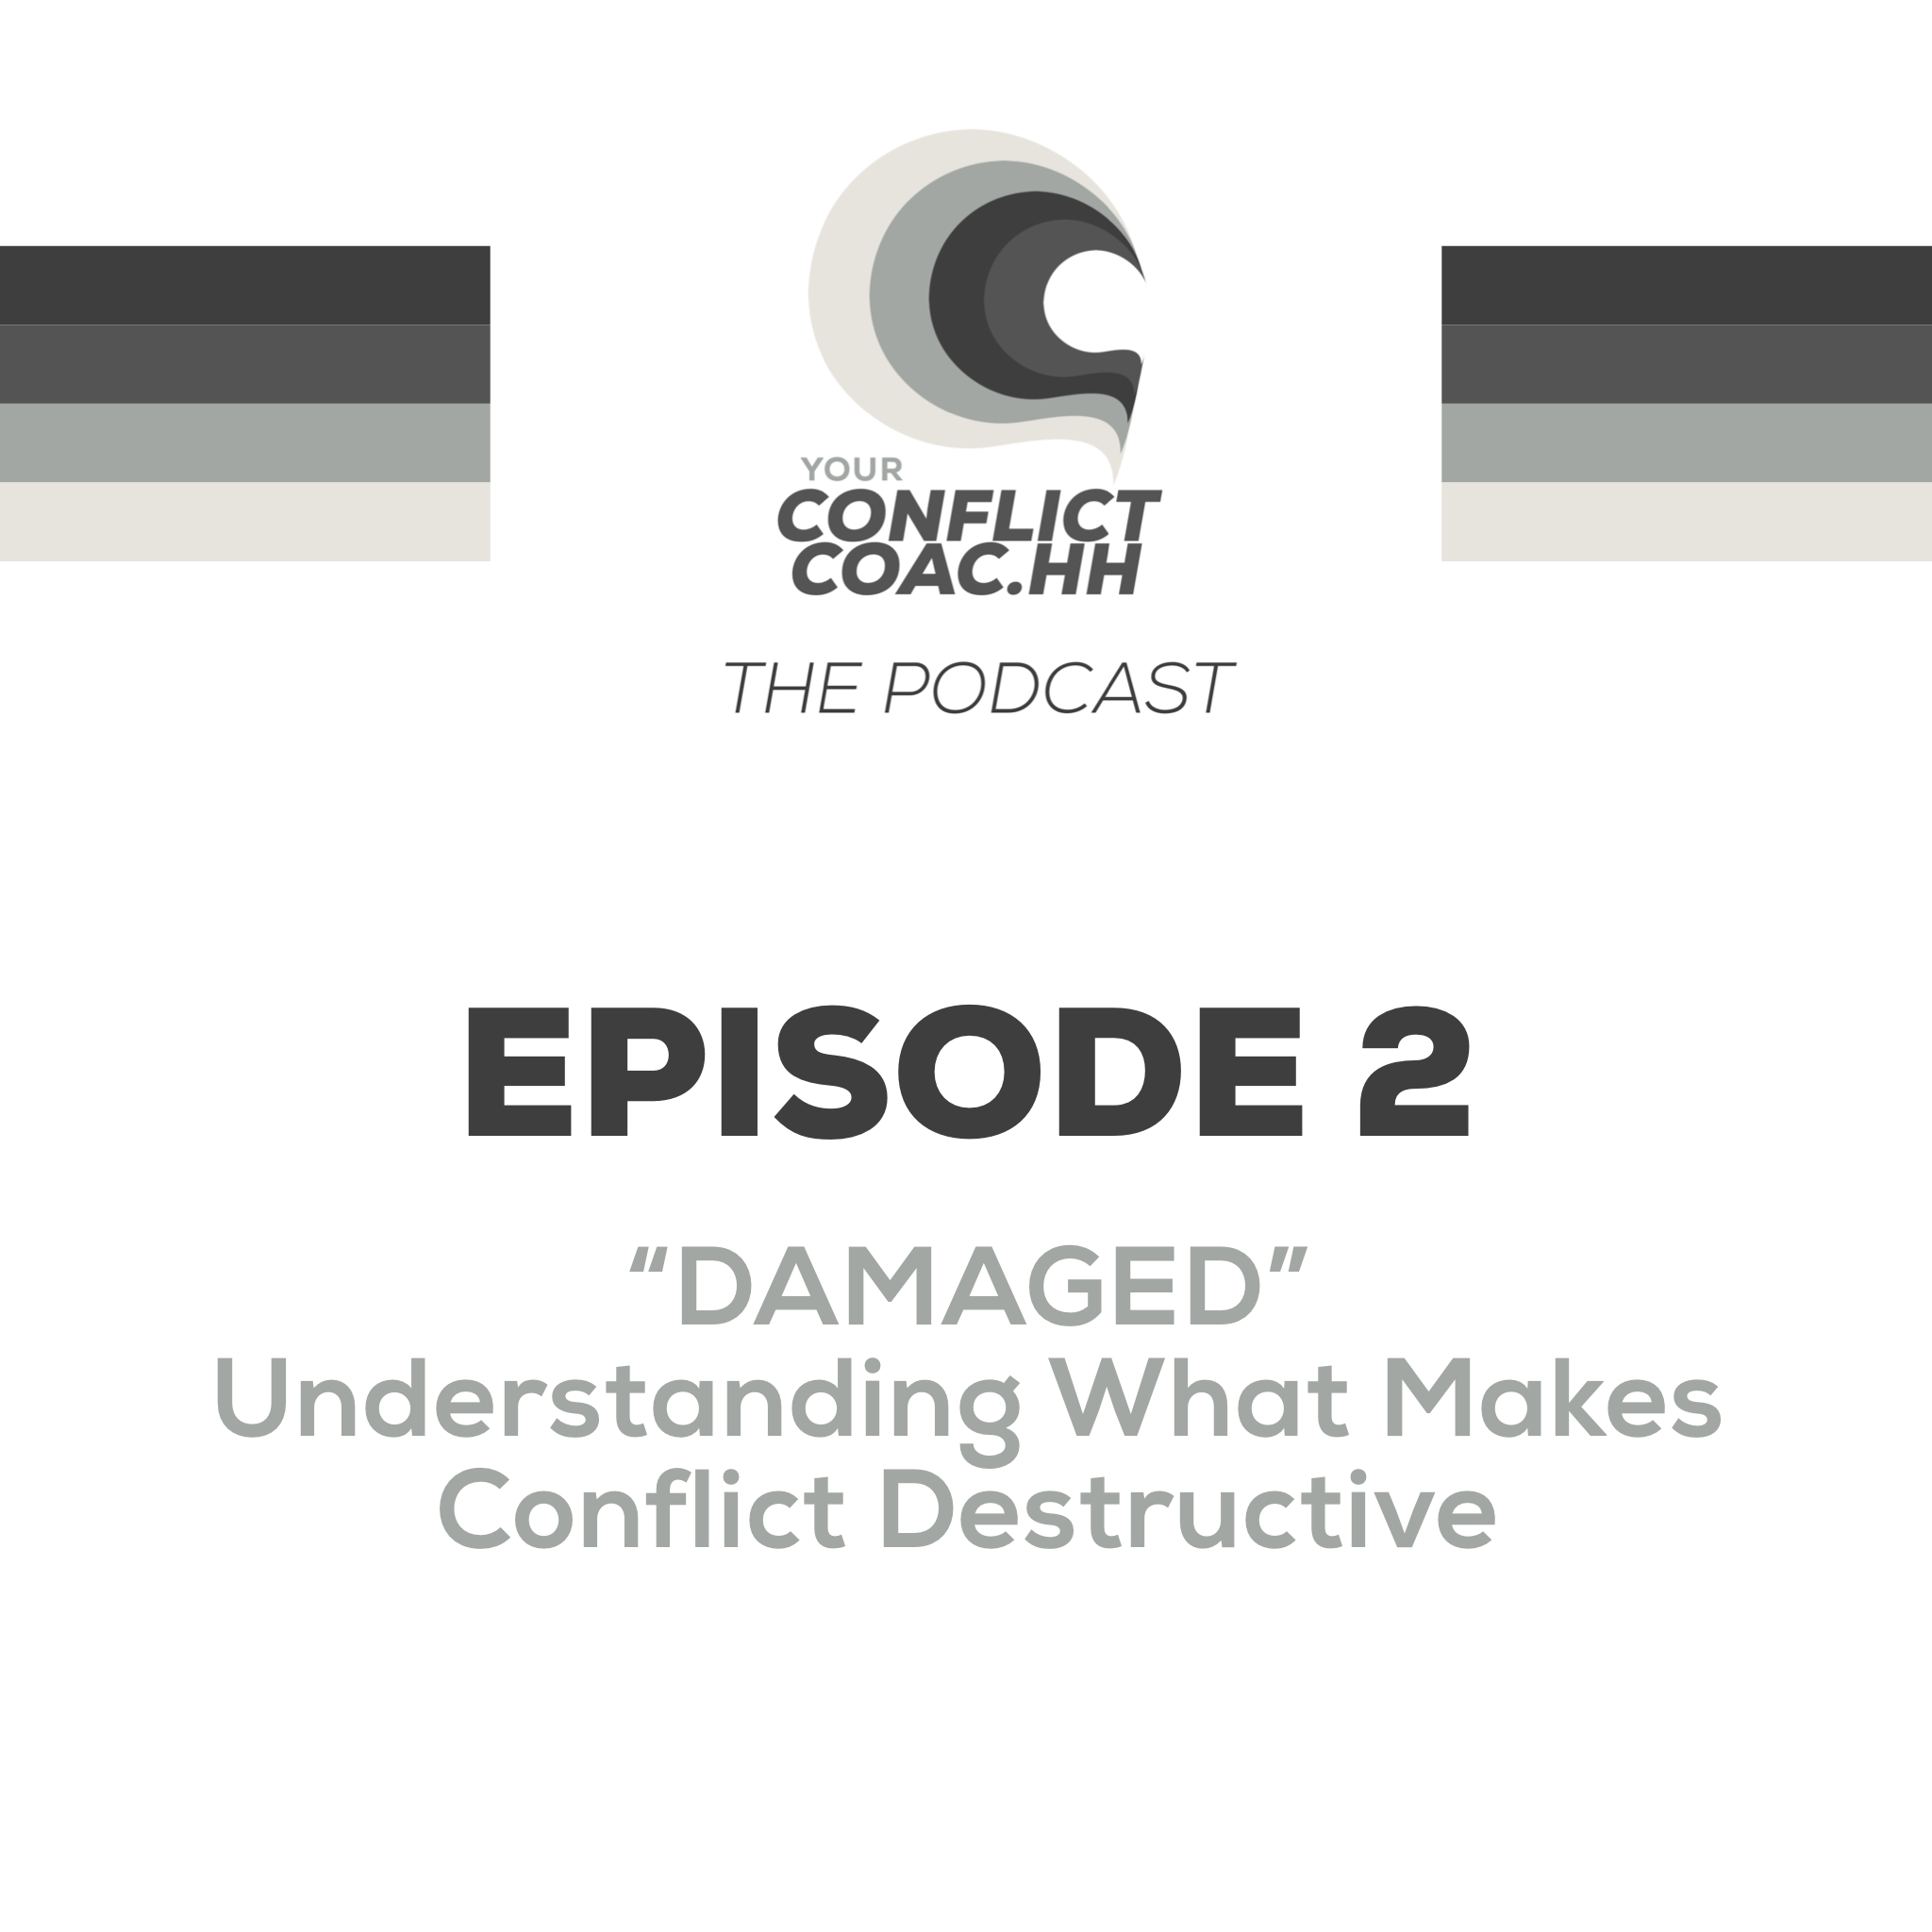 DAMAGED - Understanding What Makes Conflict Destructive